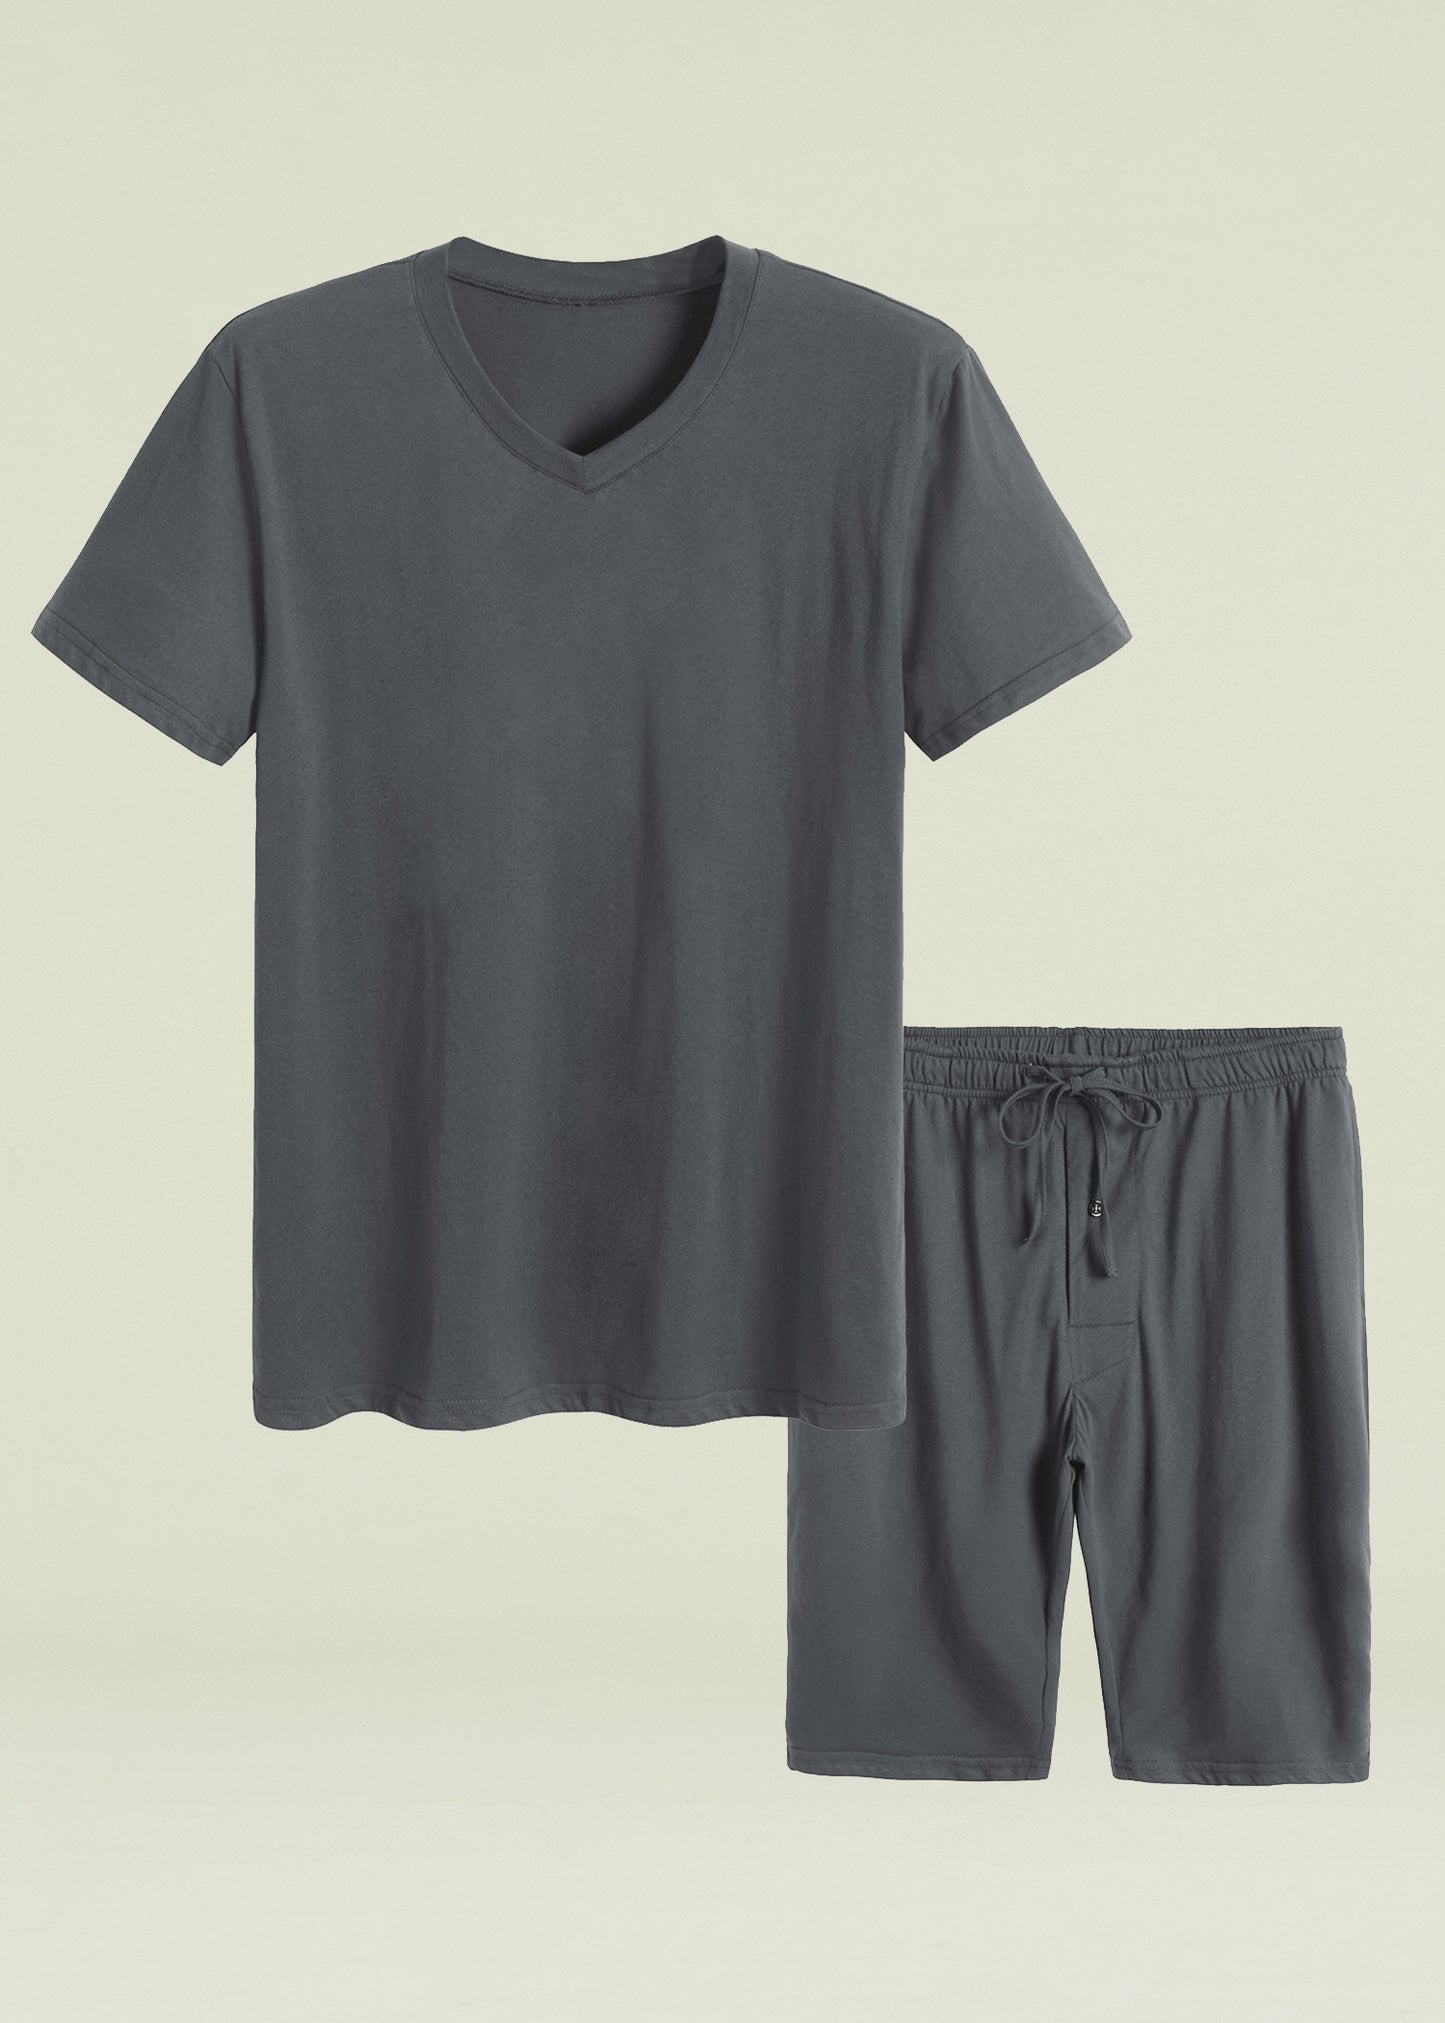 Men's Cotton Shirt with Shorts Pajama Set Knit Lounge Set